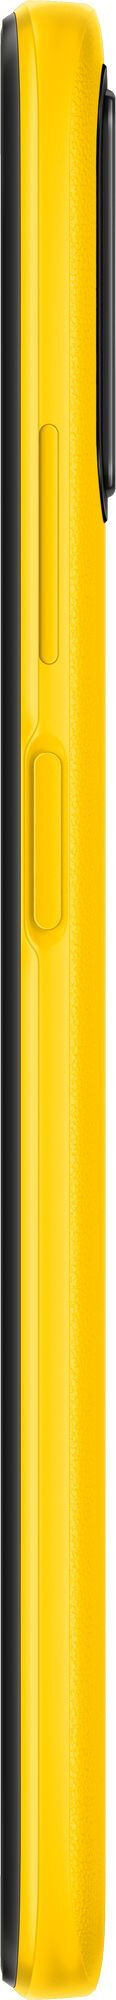 Смартфон Xiaomi Poco M3 4/64GB Yellow (Желтый)